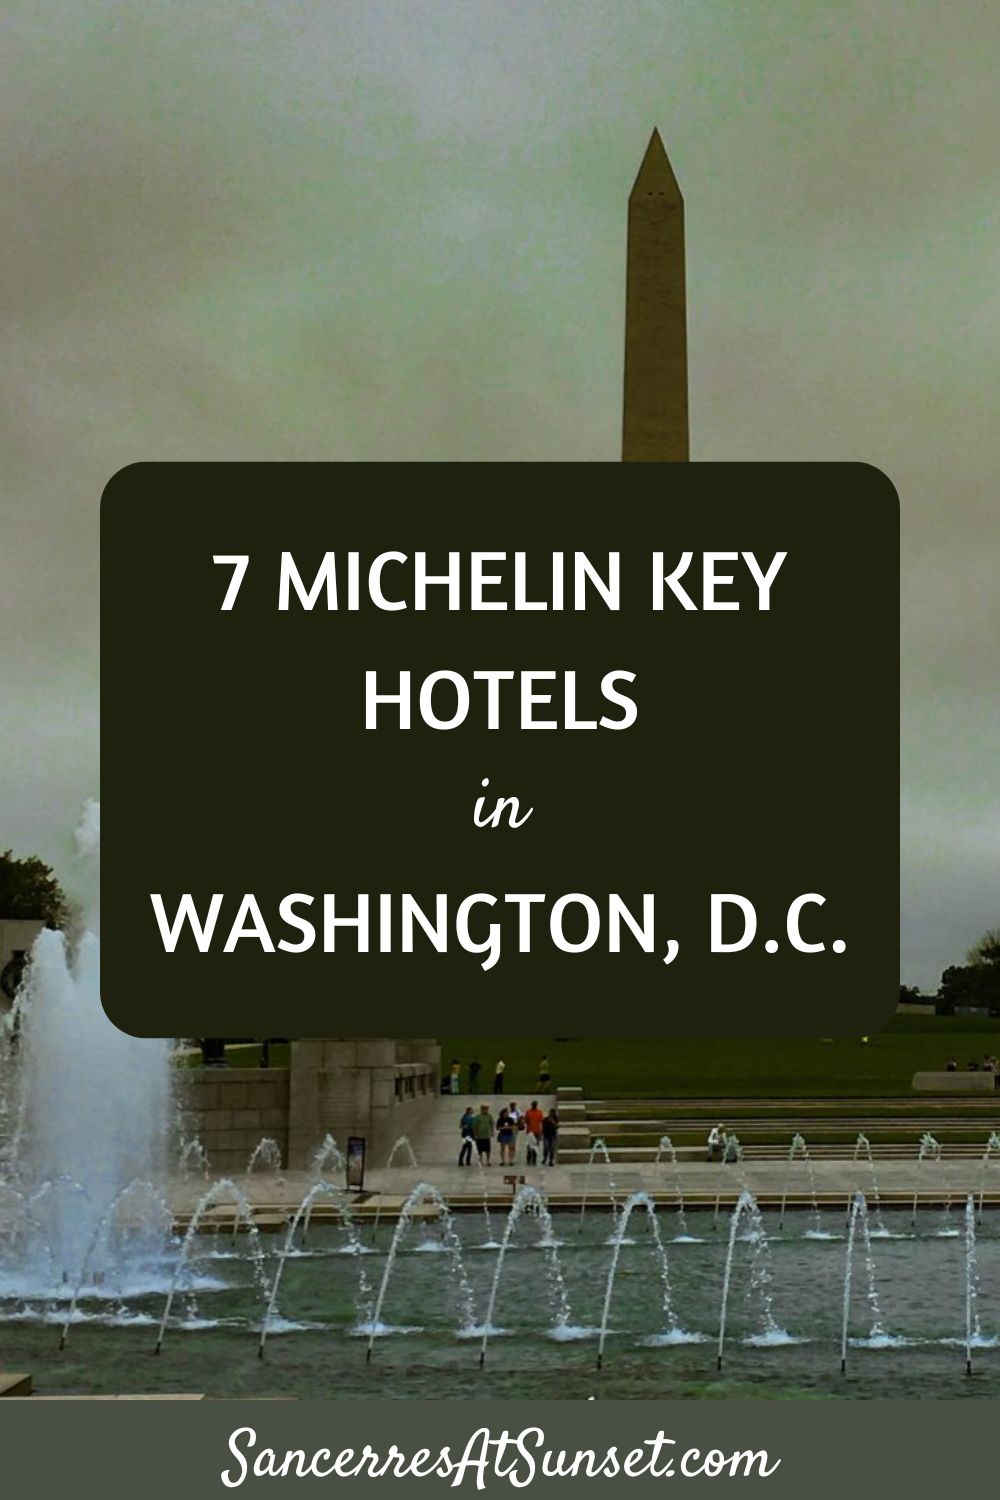 Michelin Honors 7 Key Hotels in Washington, D.C.